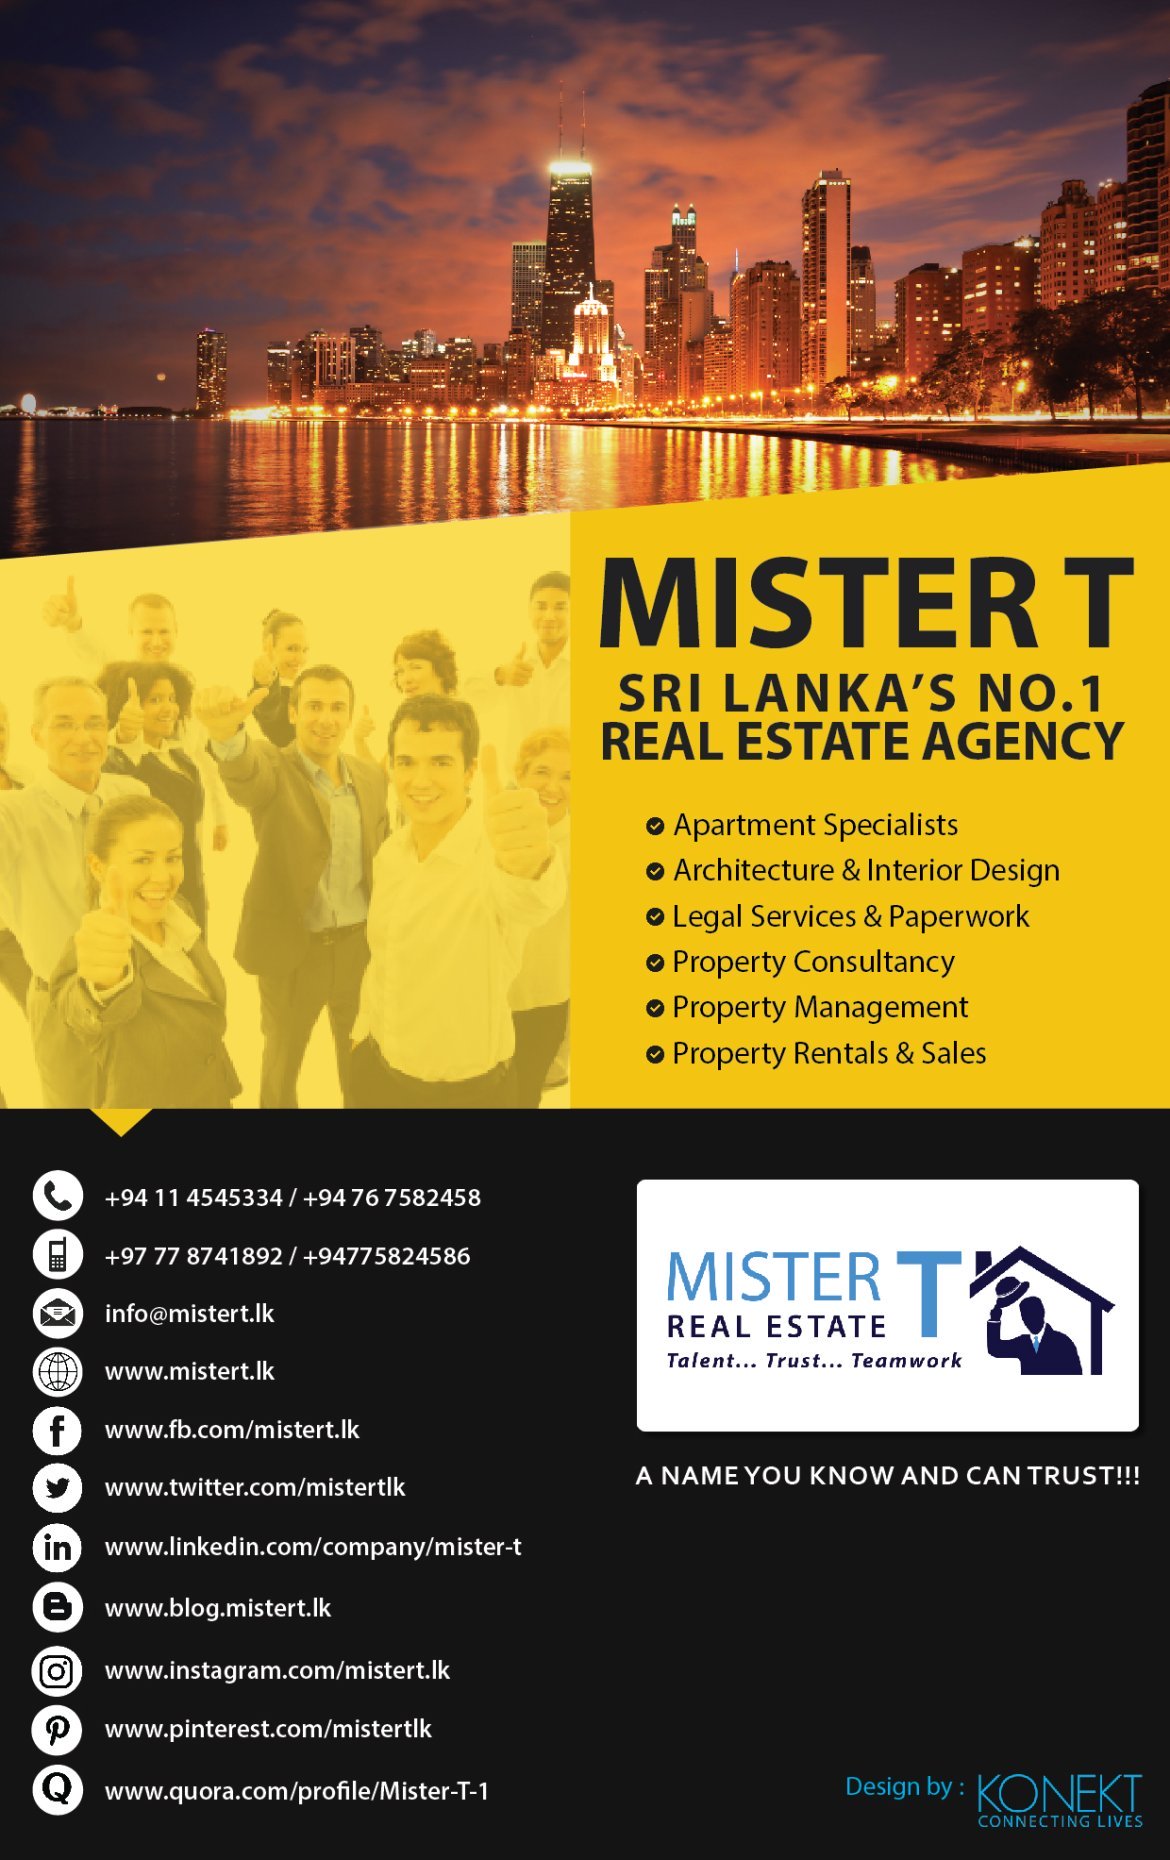 Mister T - Sri Lanka's No. 1 Real Estate Agency